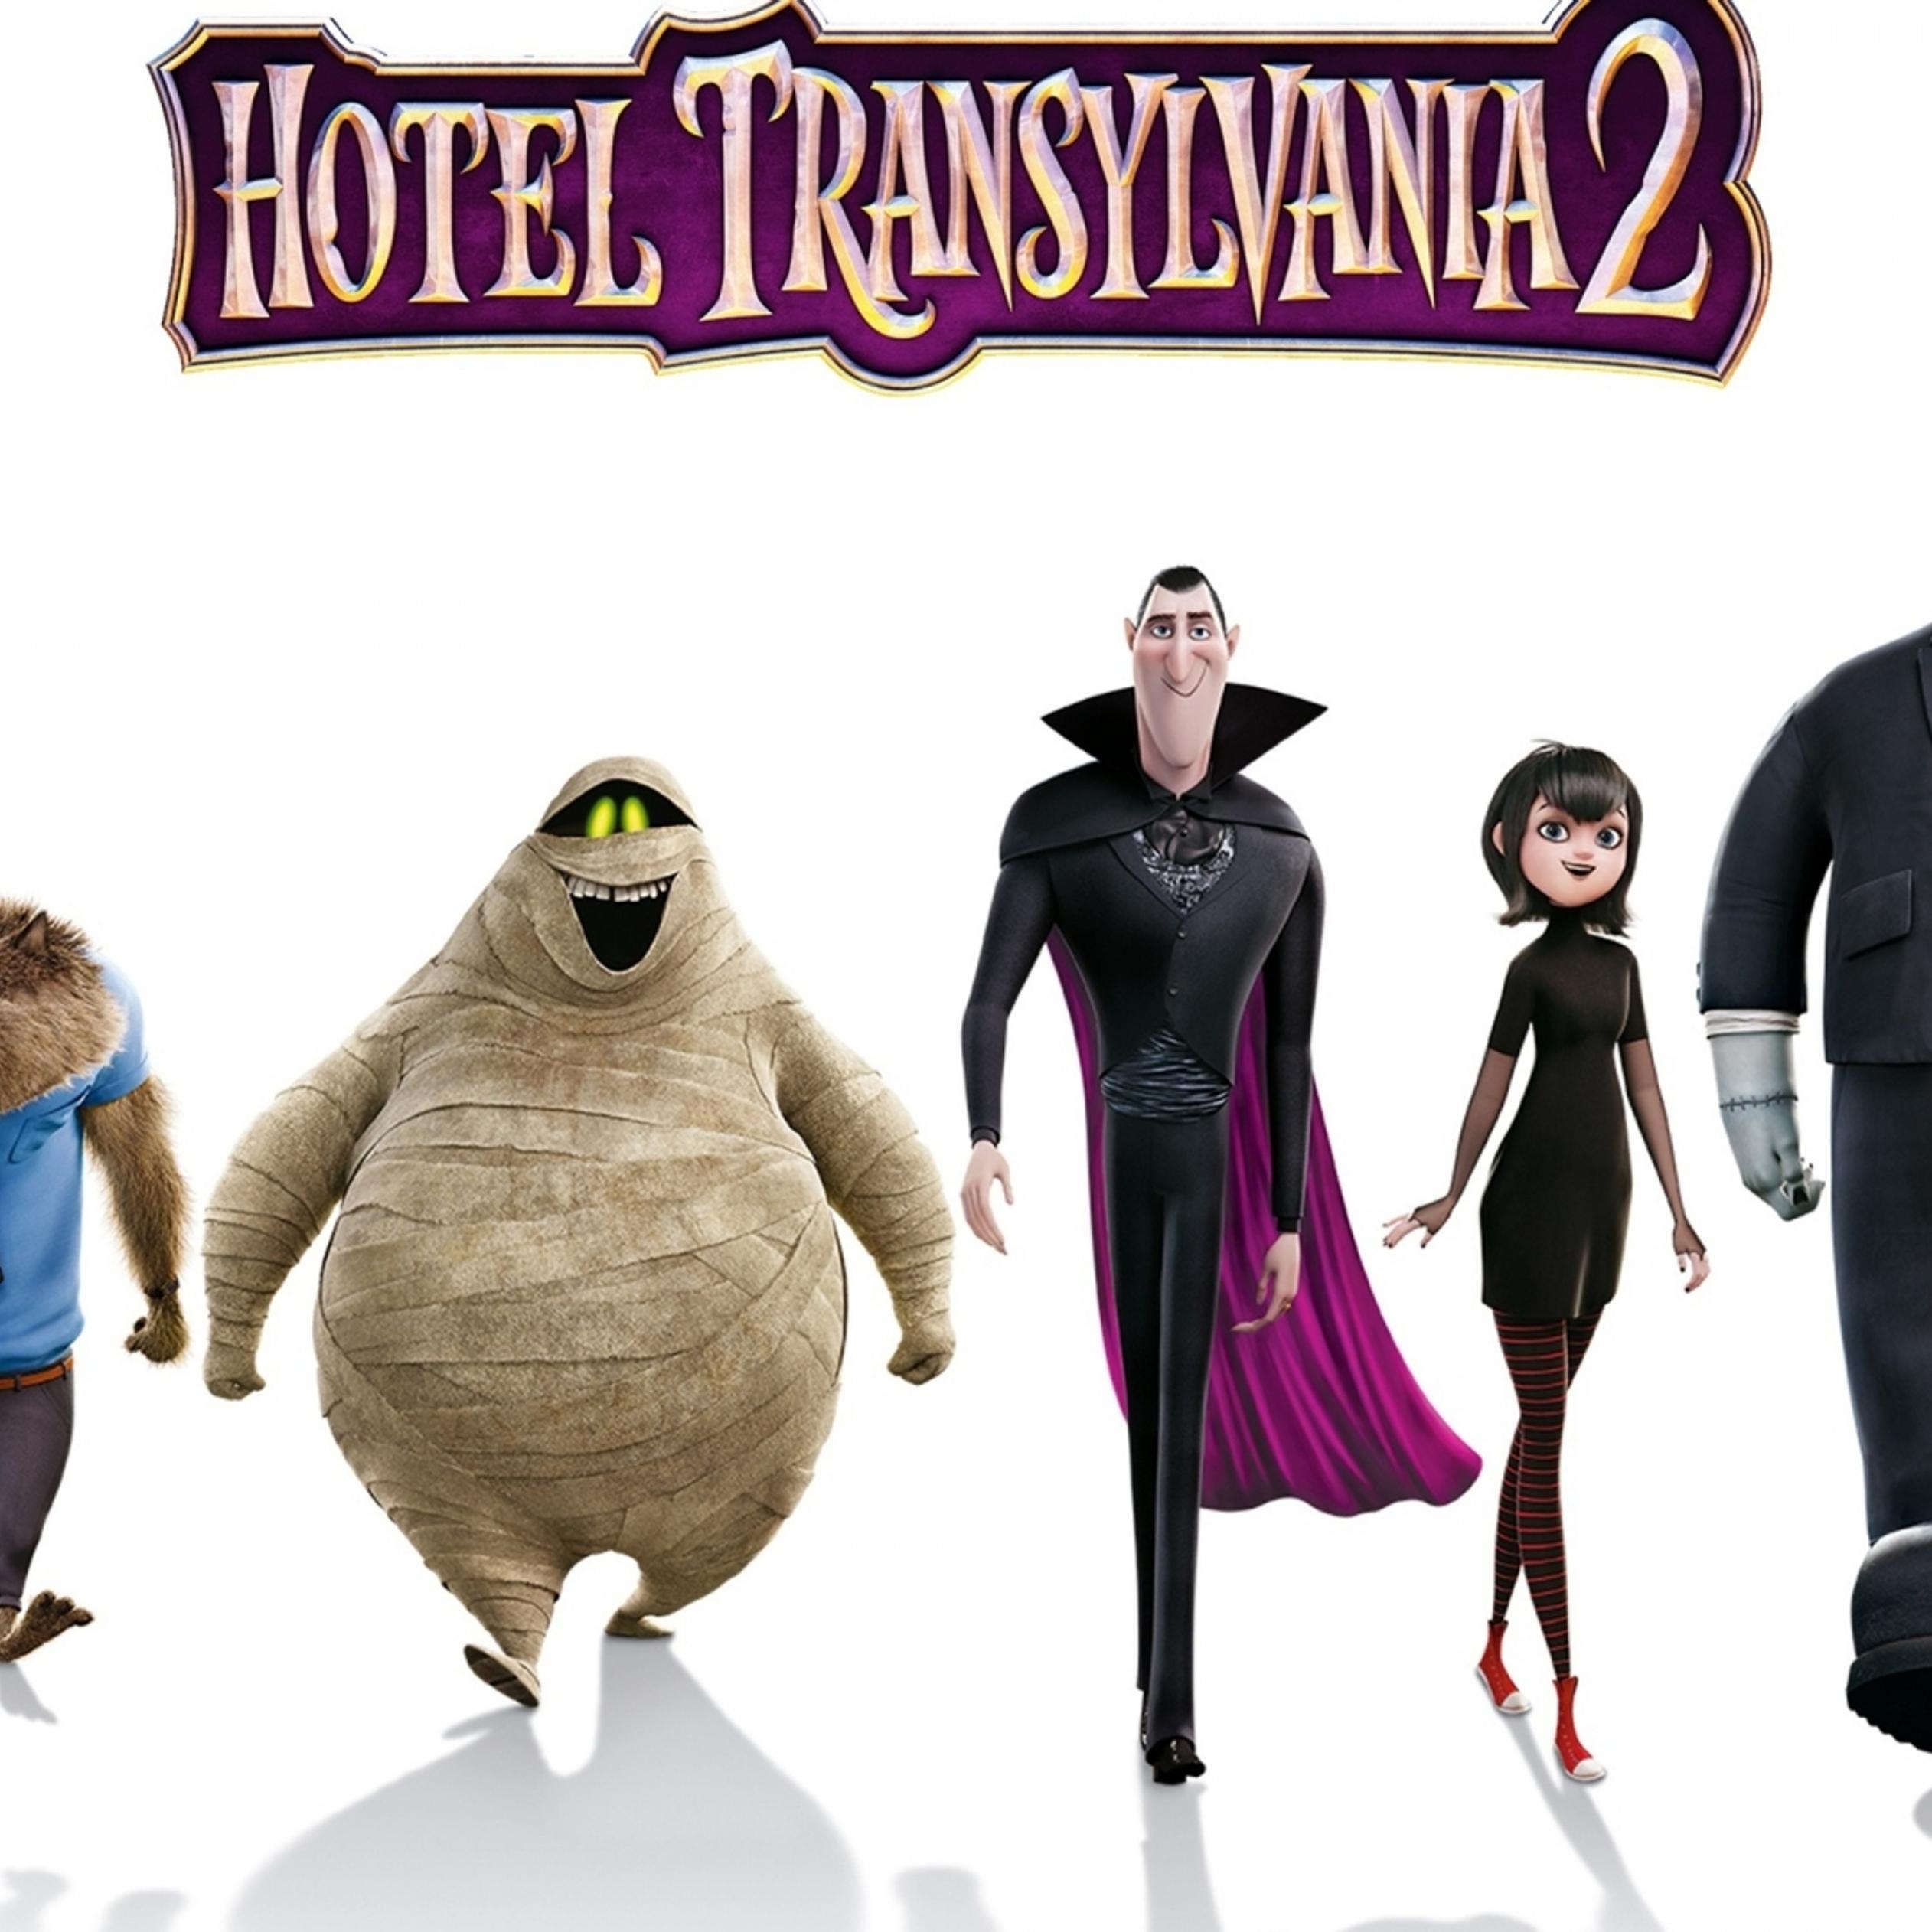 The Full Movie Of Hotel Transylvania 2 - knsdesignbuilt